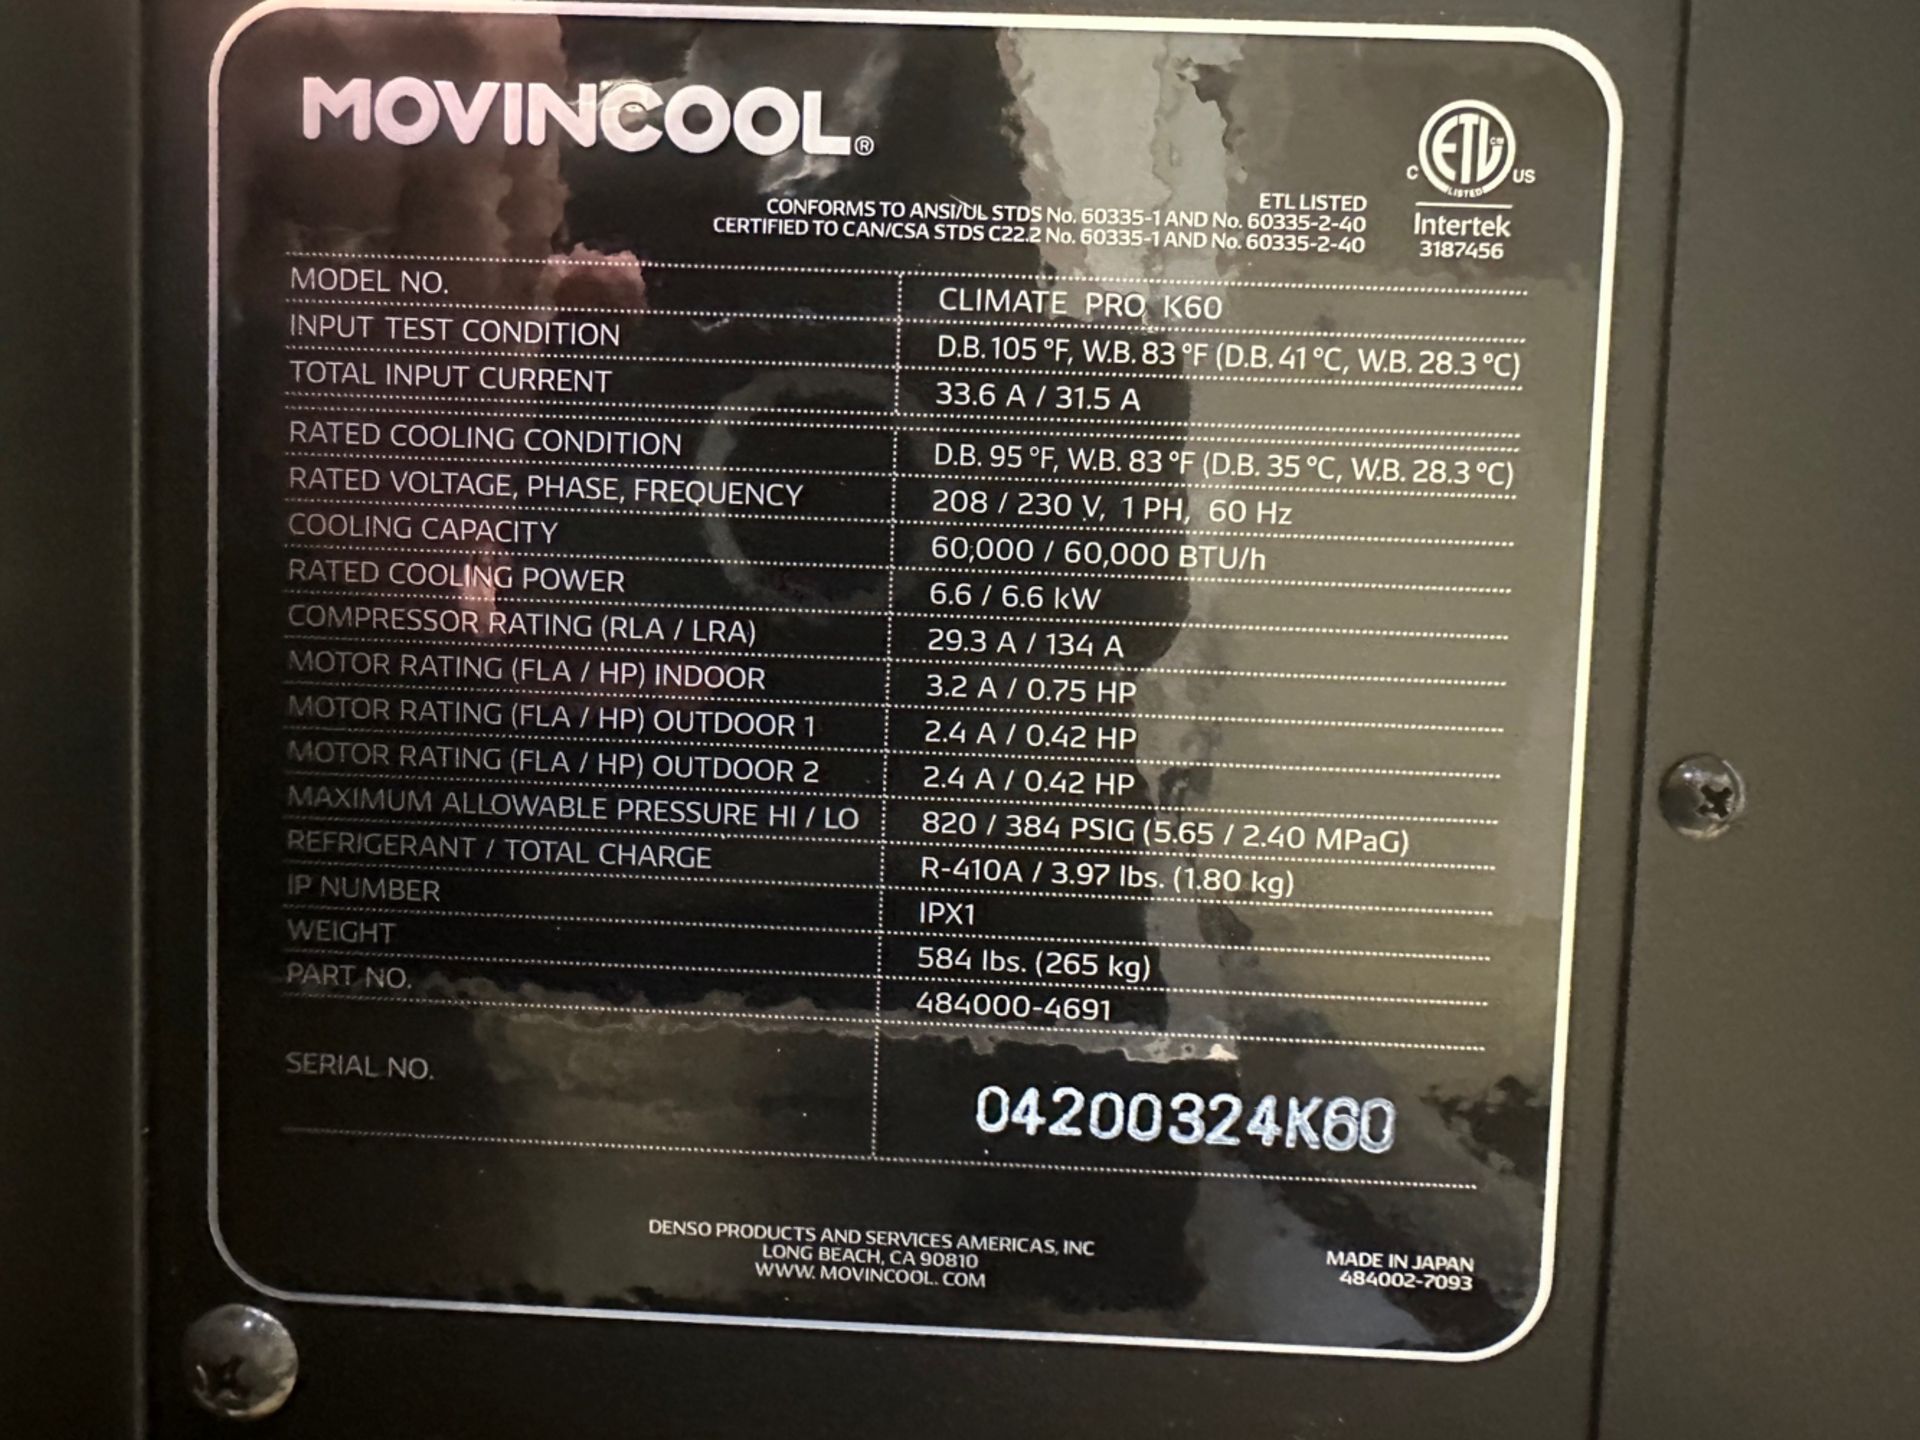 MovinCool Portable Air Cooler, Model: CLIMATE PRO K60, SN: 04200324K60, Cap: 60,000 BTU - Image 3 of 4